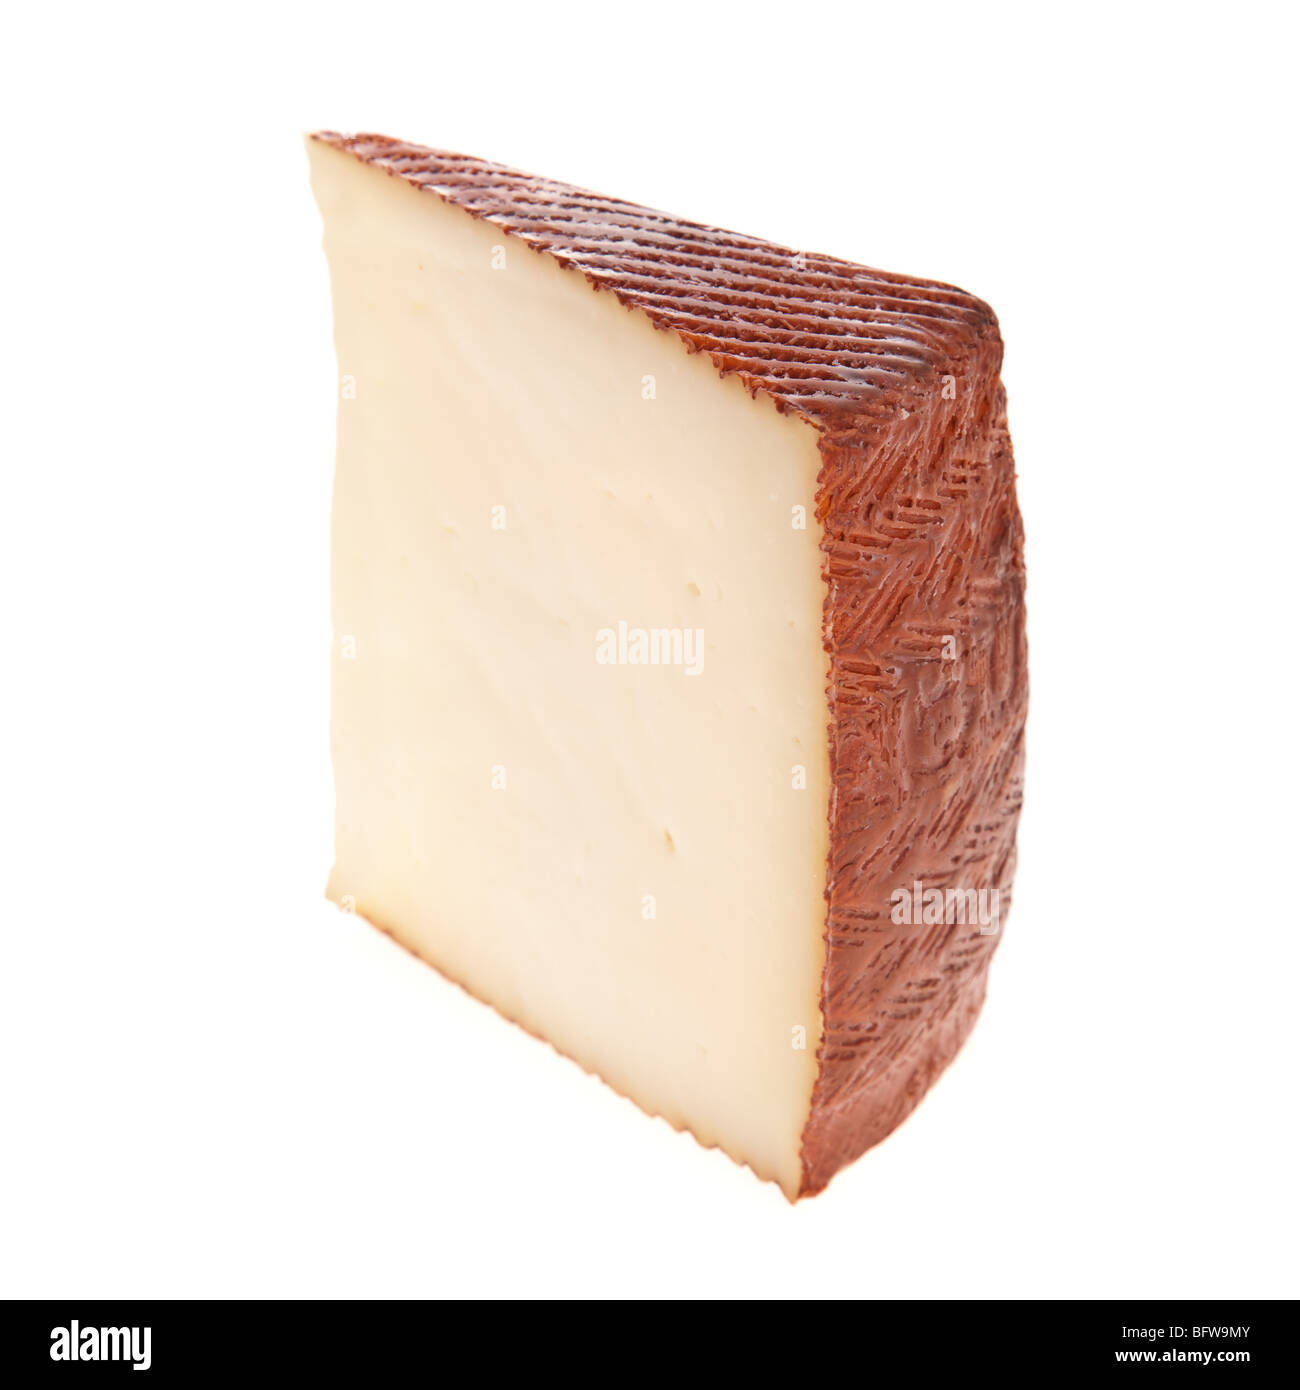 Goat cheese slice isolated on white background Stock Photo